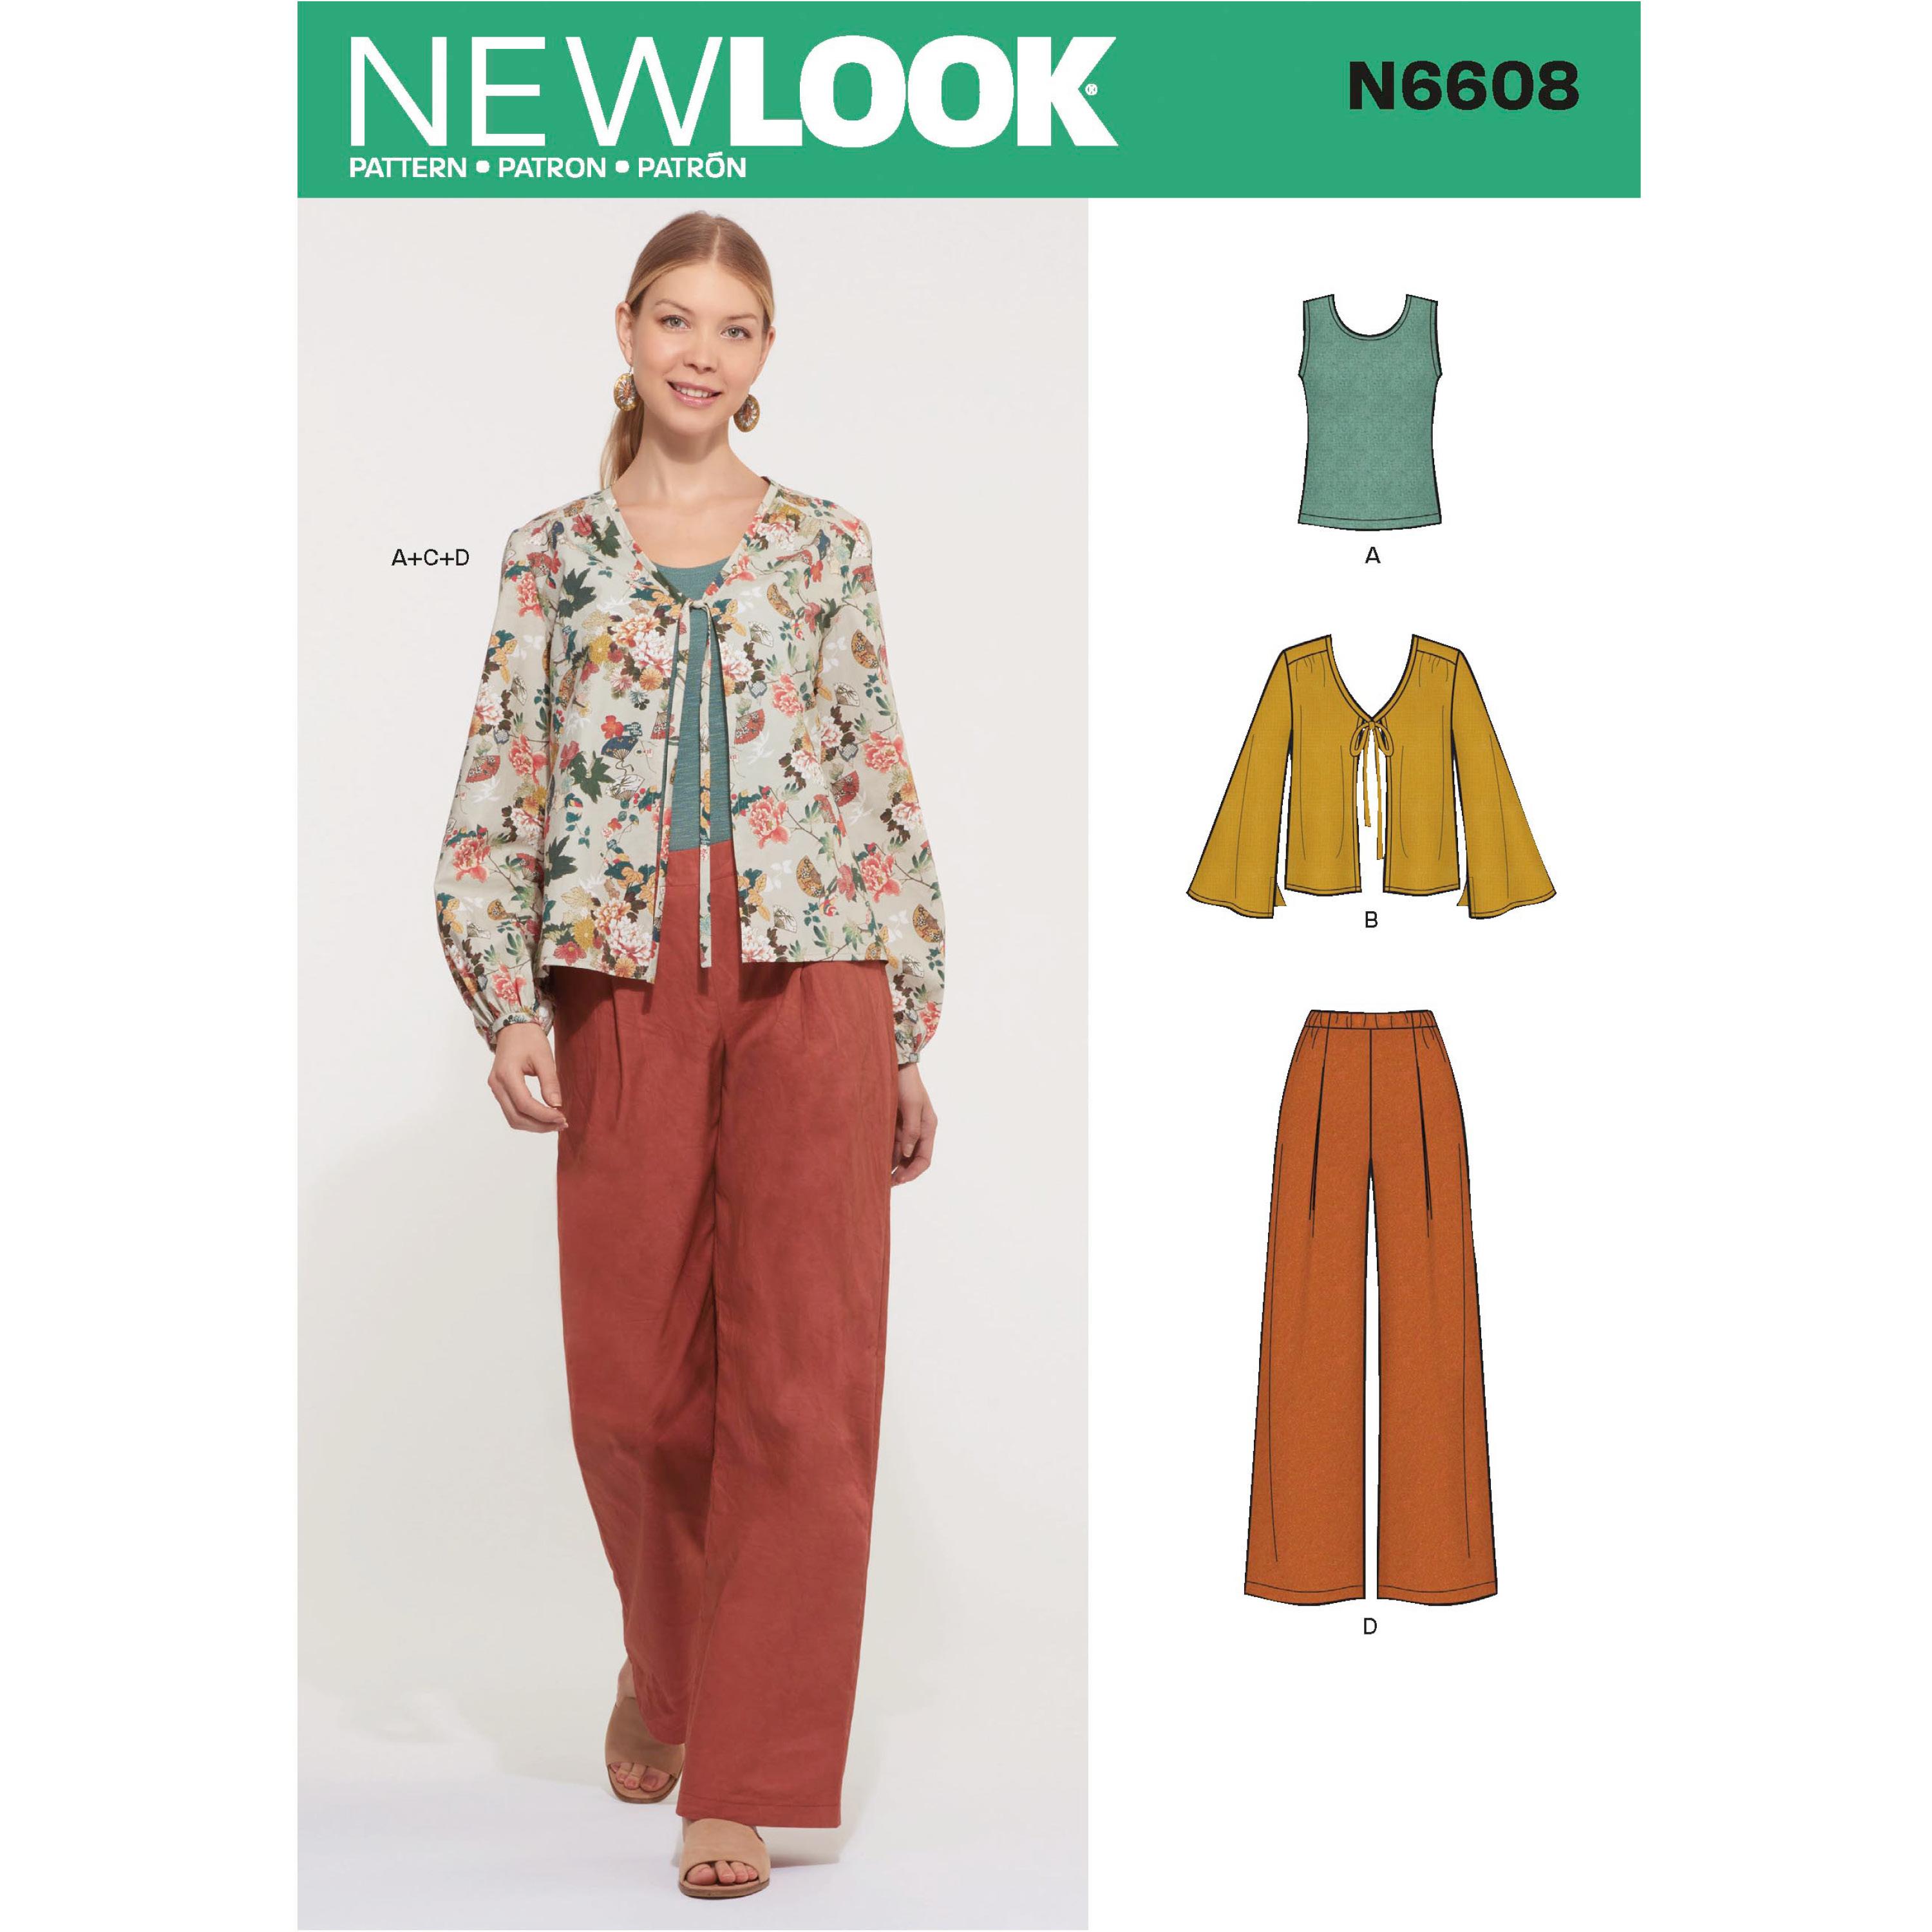 NewLook Sewing Pattern N6608 Misses' Jacket, Pants and Top